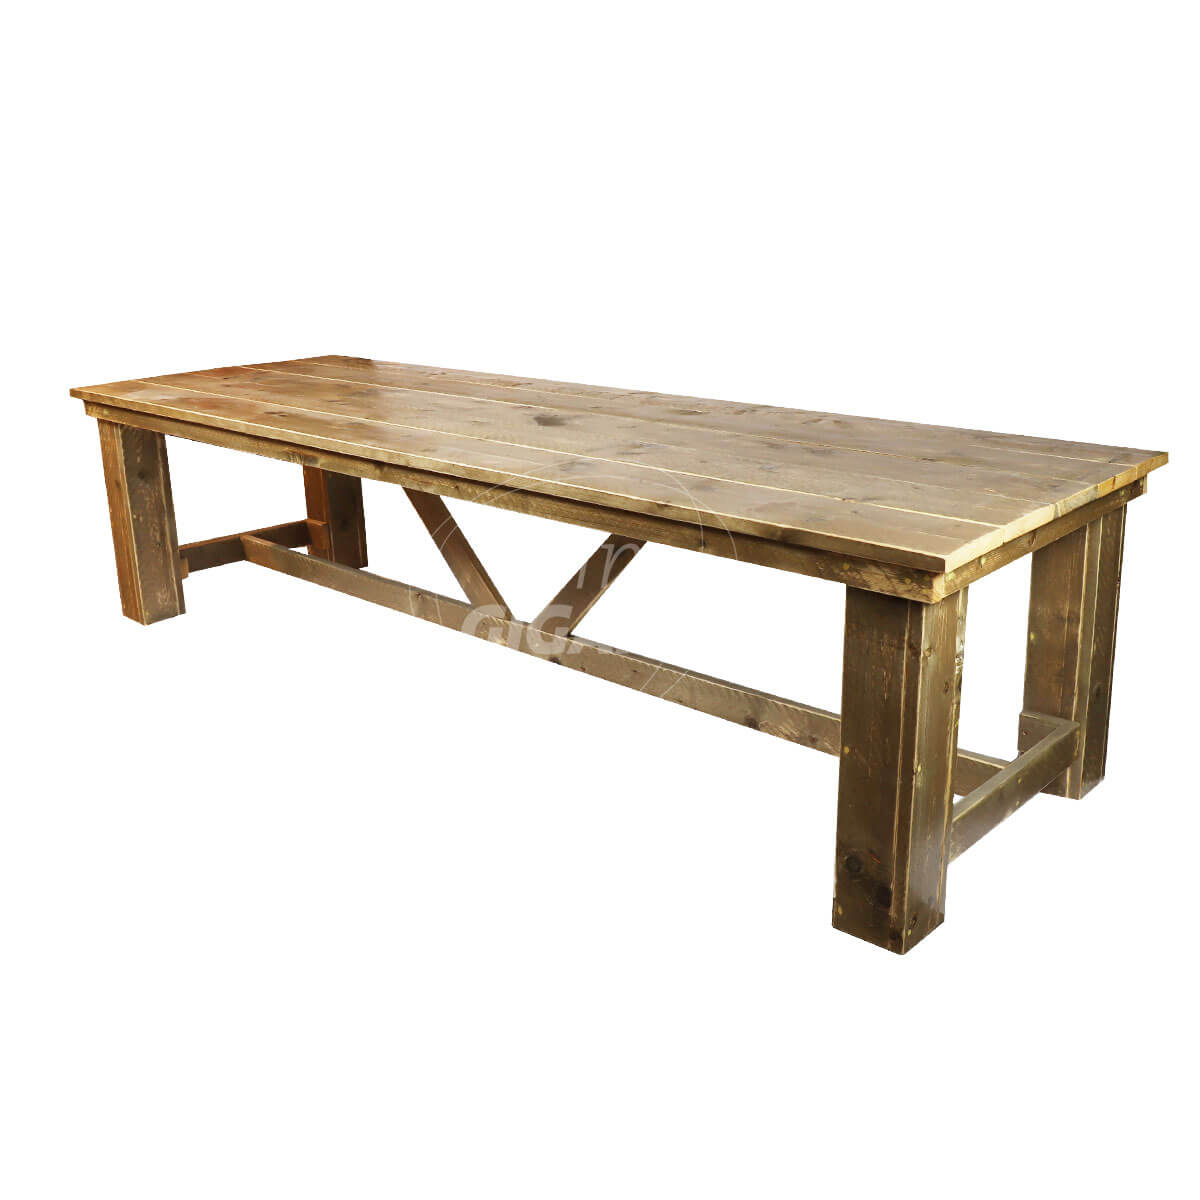 Panter Anzai Horizontaal Steigerhouten tafel - 300 cm, 10 Personen - Tuingigant.com